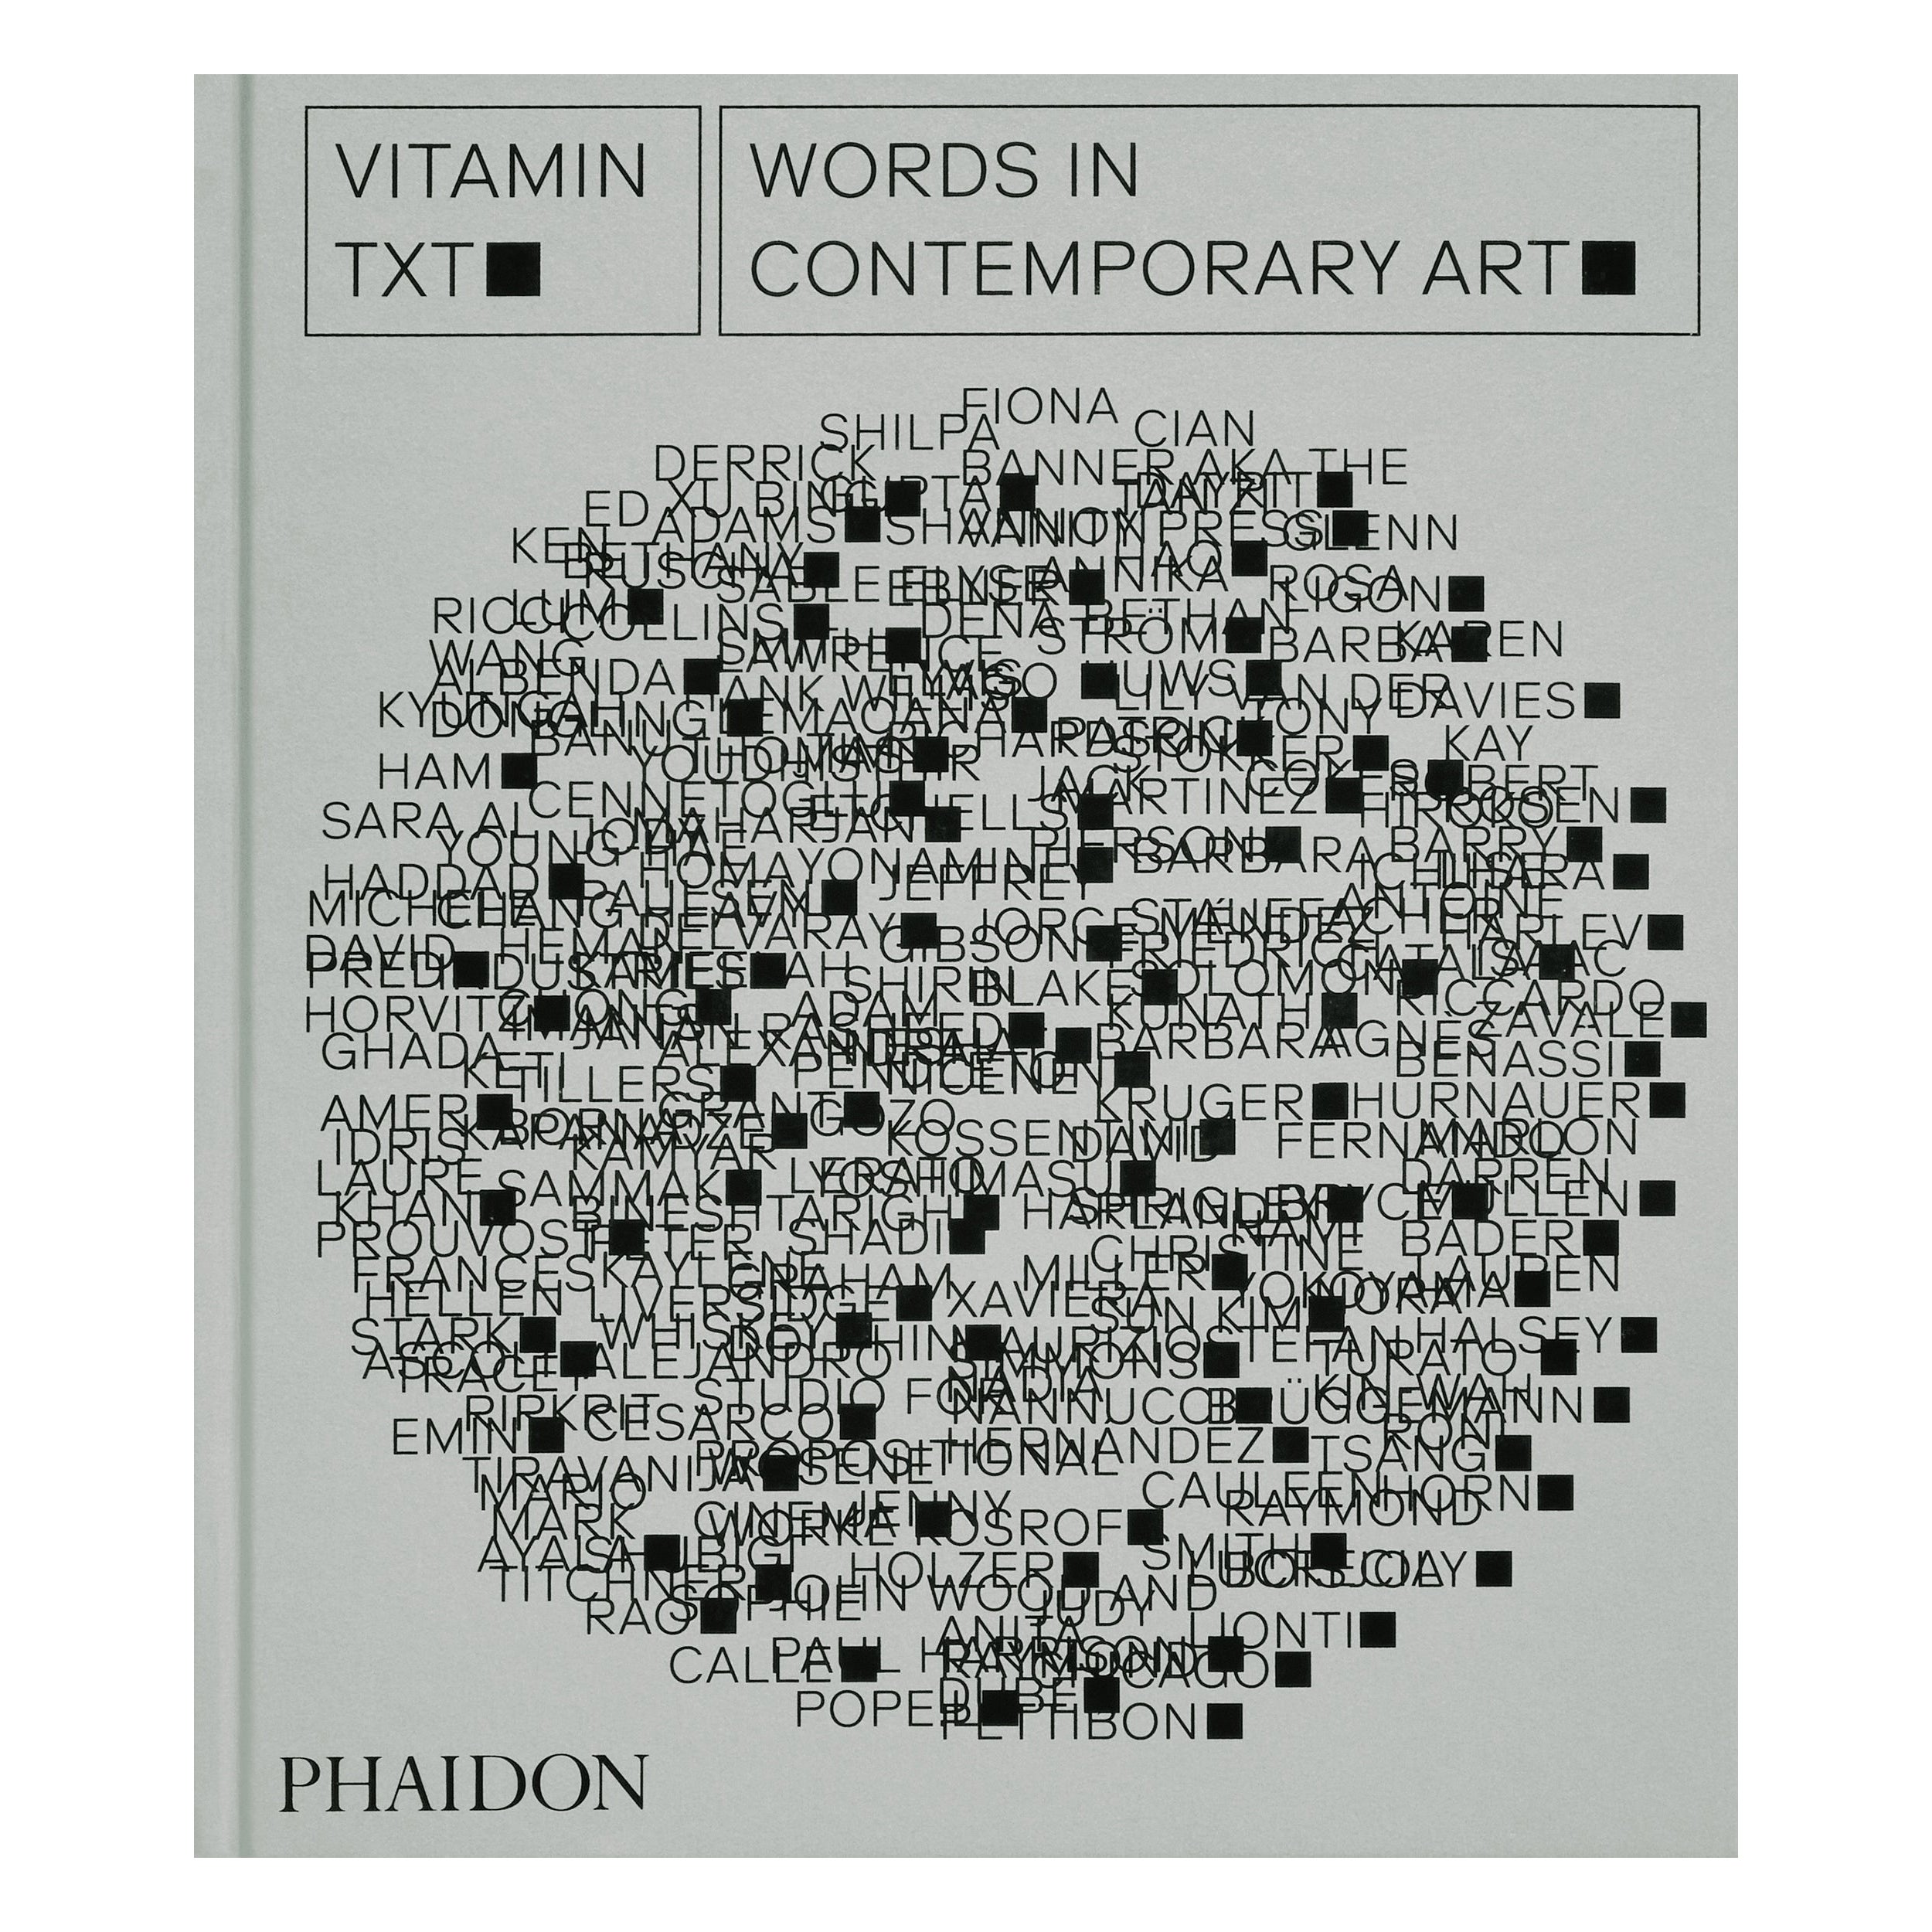 Vitamin Txt Words in Contemporary Art